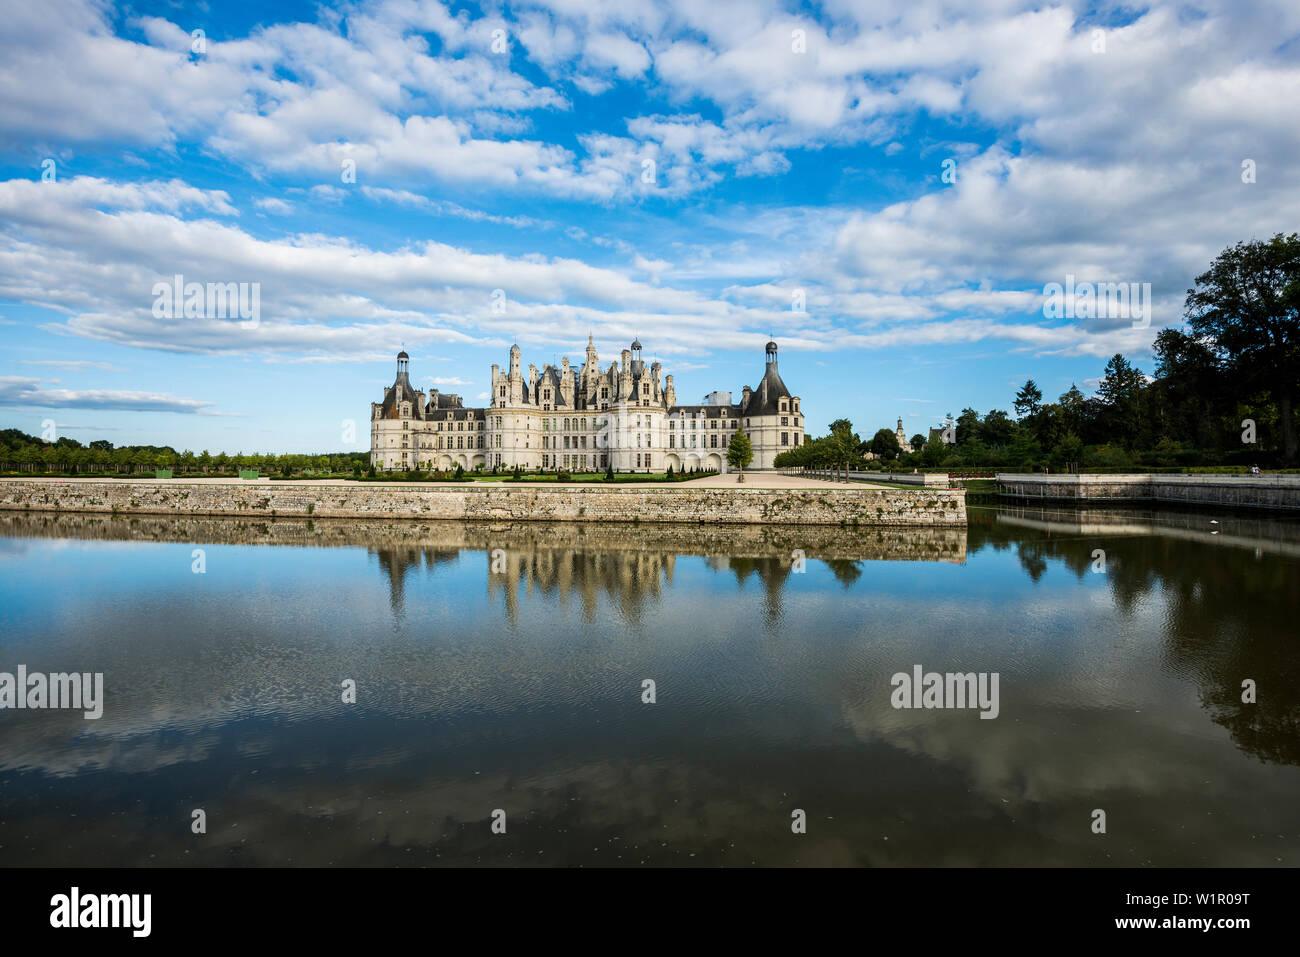 Chambord Castle, North Facade, UNESCO World Heritage Site, Chambord, Loire, Department Loire et Cher, Centre Region, France Stock Photo